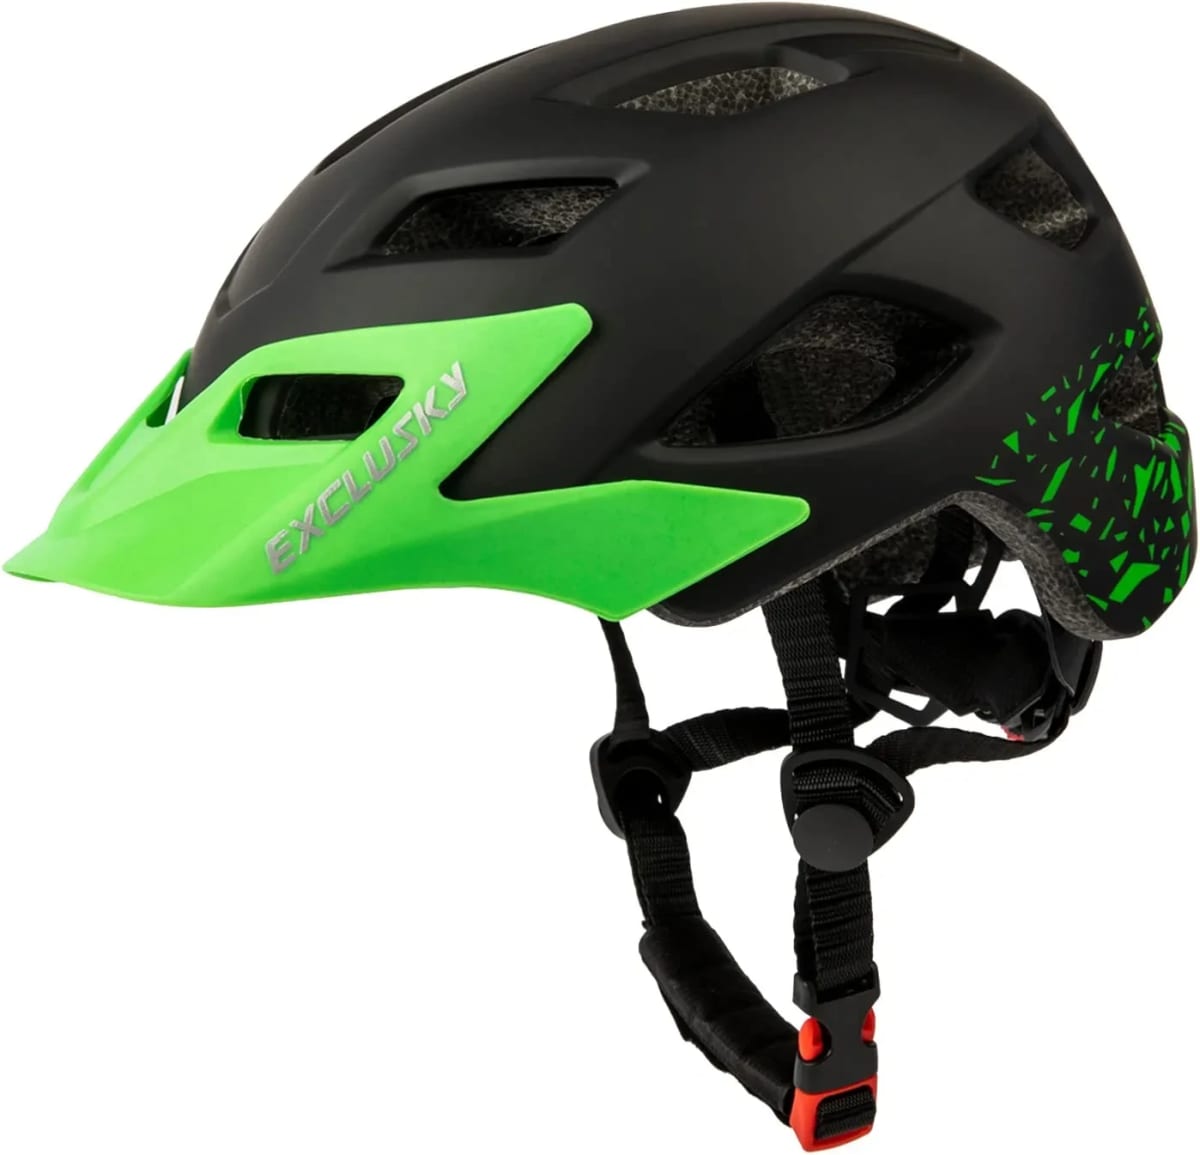 Kids Bike Helmet Adjustable Safety Lightweight